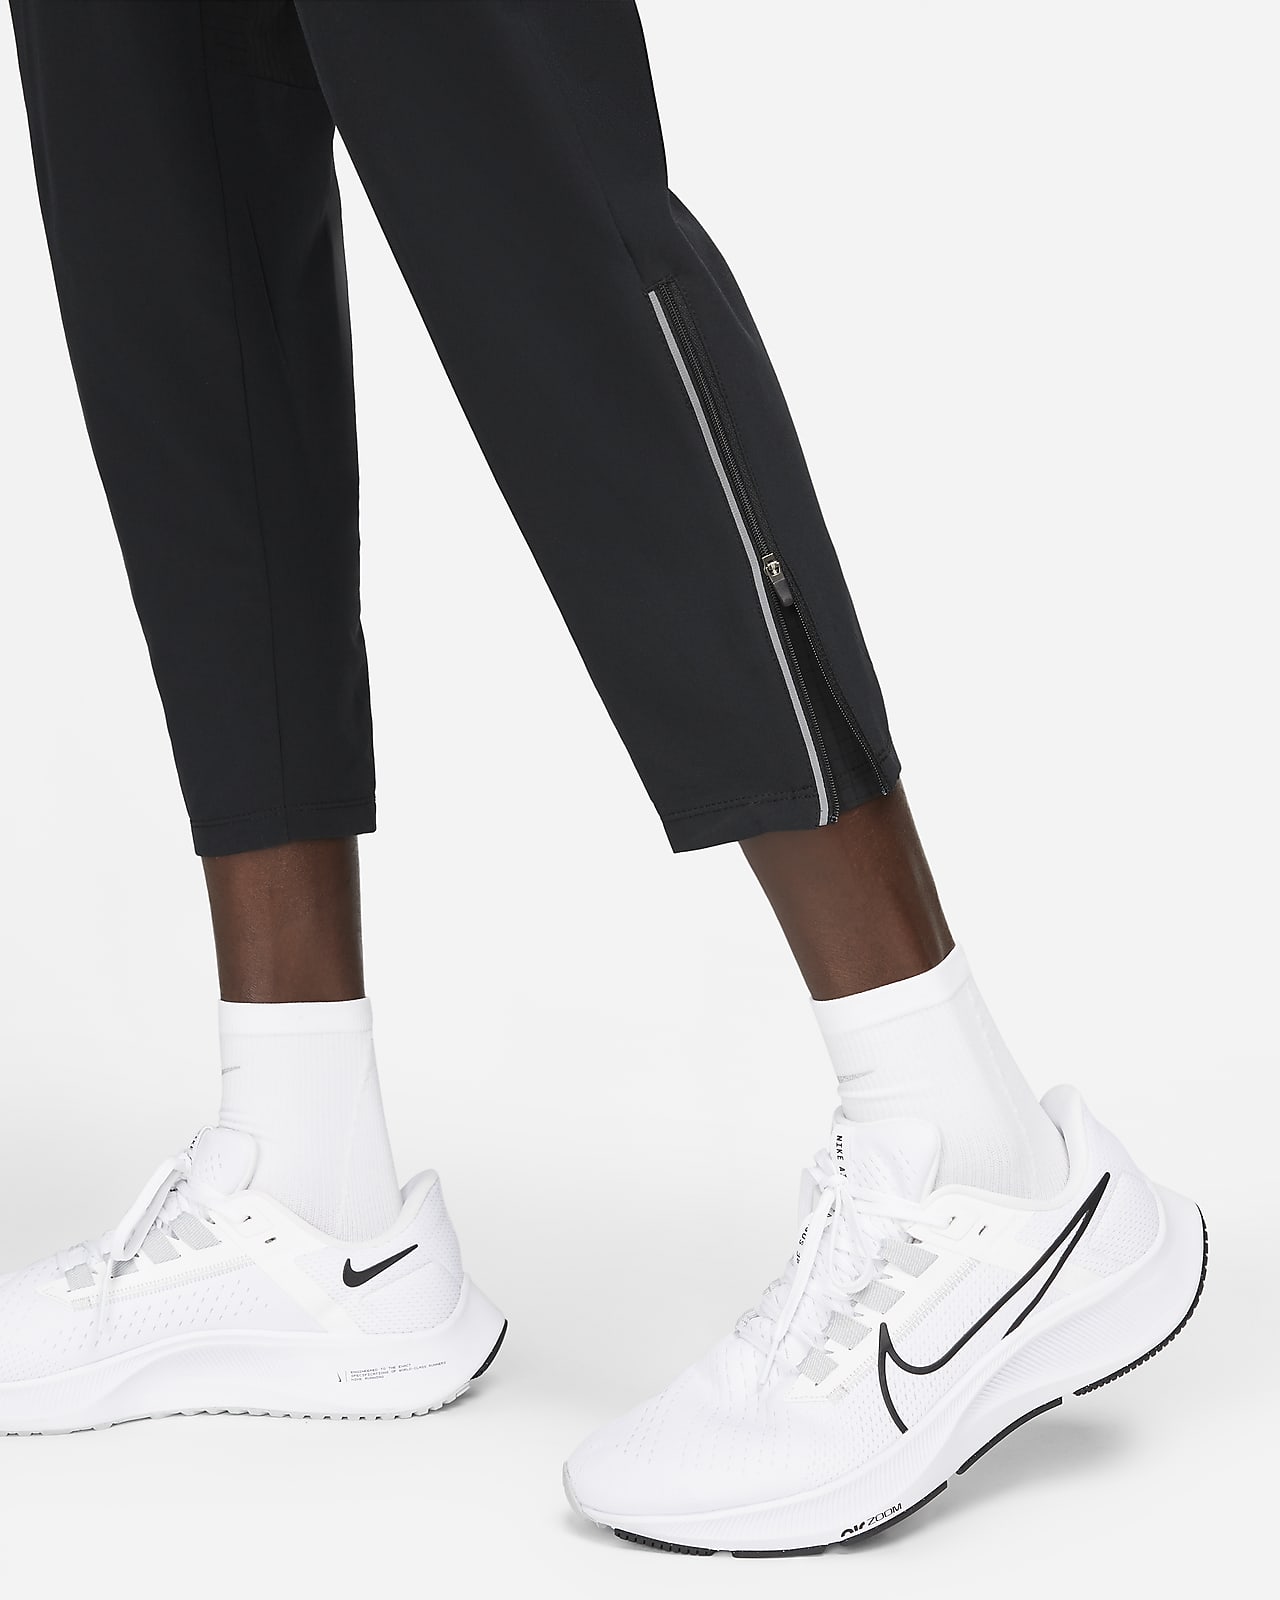 Nike Dri-FIT Phenom Elite Woven Running Pants